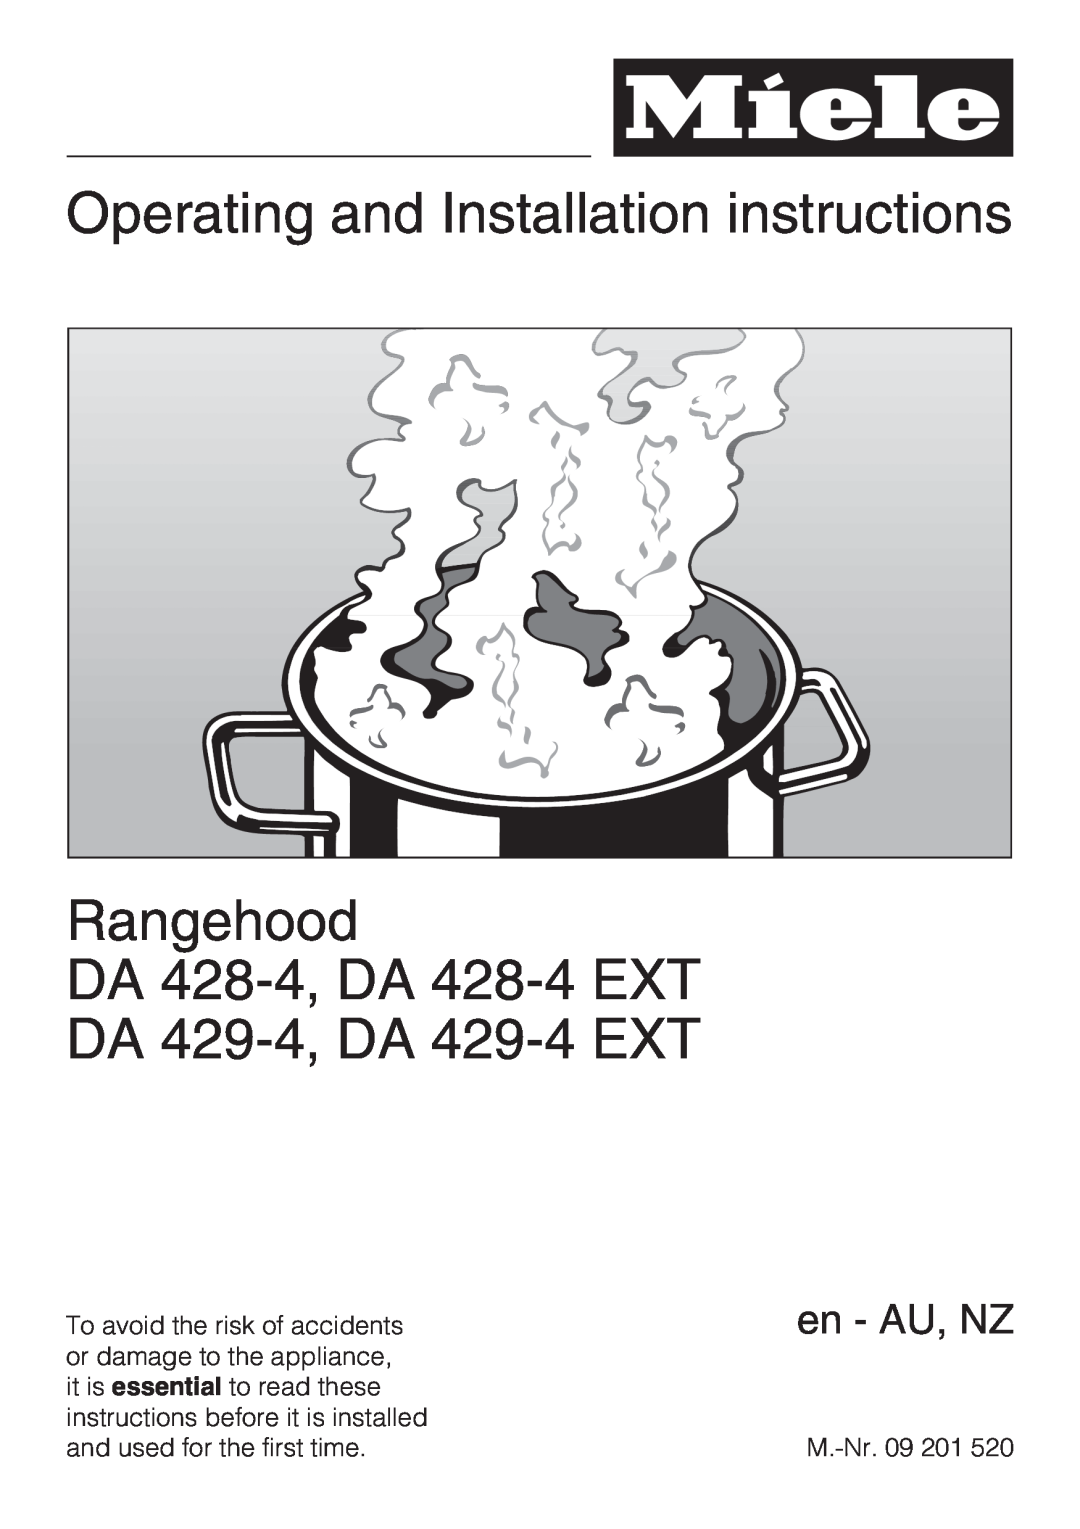 Miele DA 429-4 EXT, DA 428-4 installation instructions Operating and Installation instructions Rangehood, en - AU, NZ 